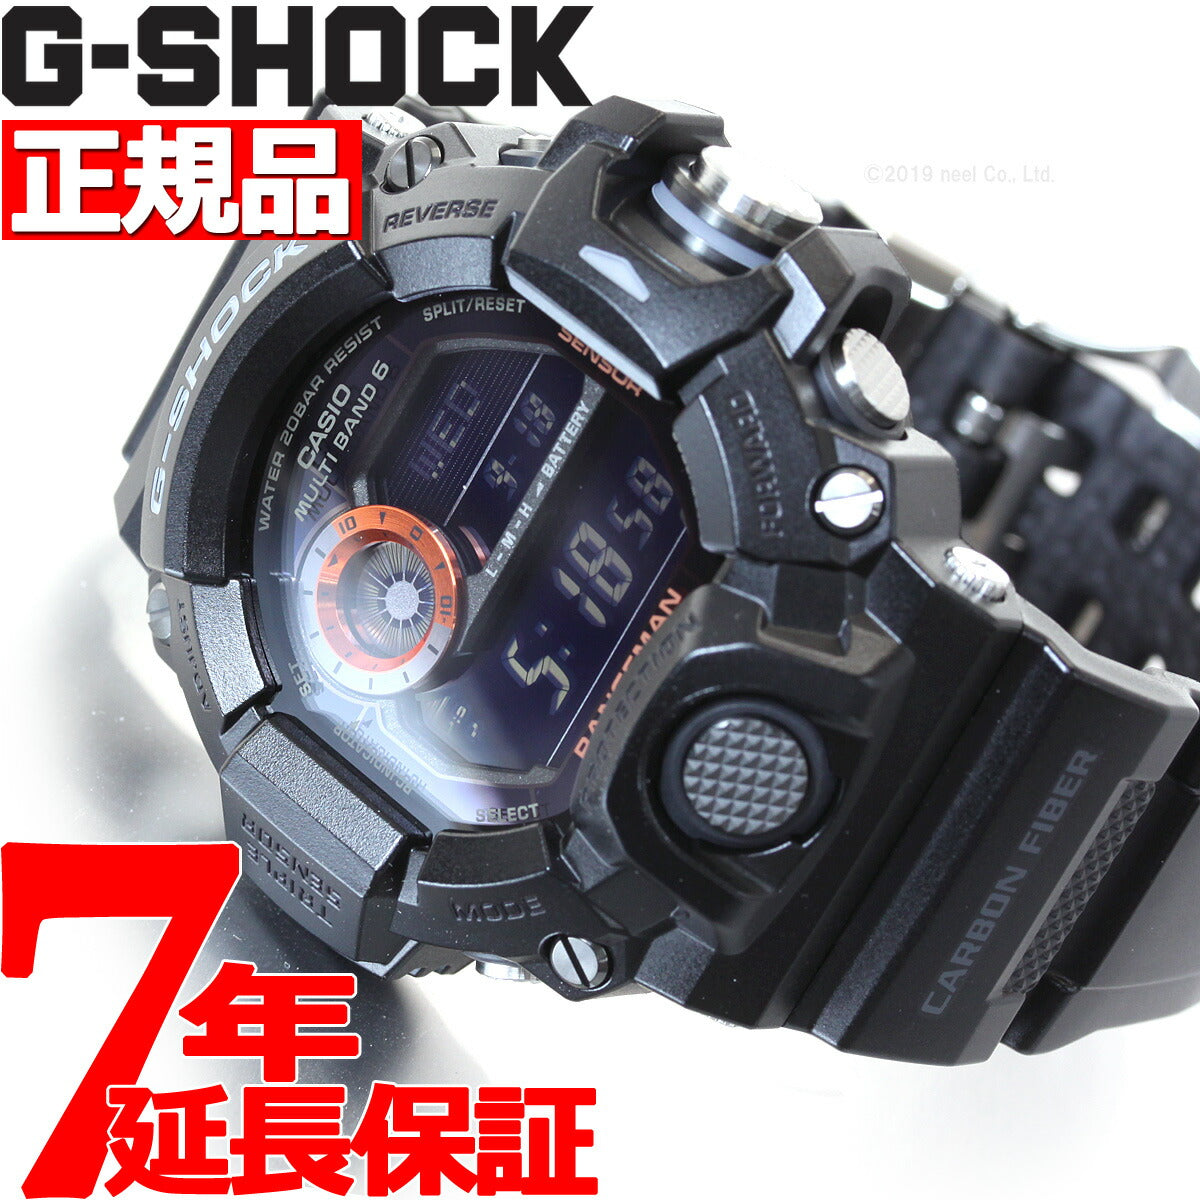 G-SHOCK Gショック RANGEMAN レンジマン GW-9400BJ-1JF メンズ 腕時計